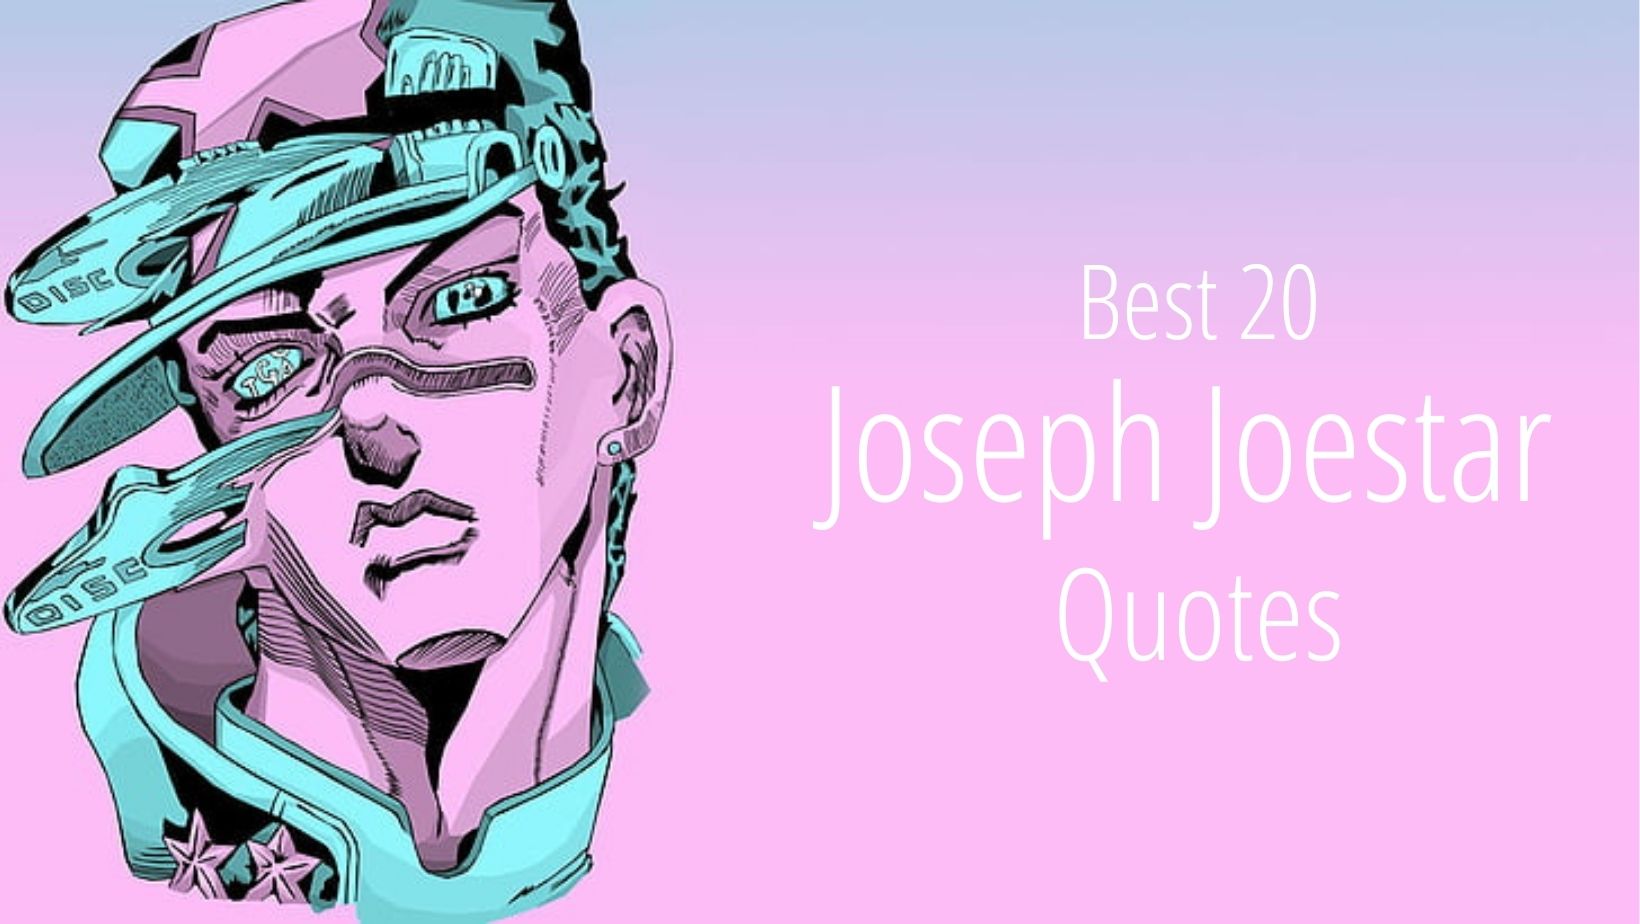 Joseph Joestar Quotes